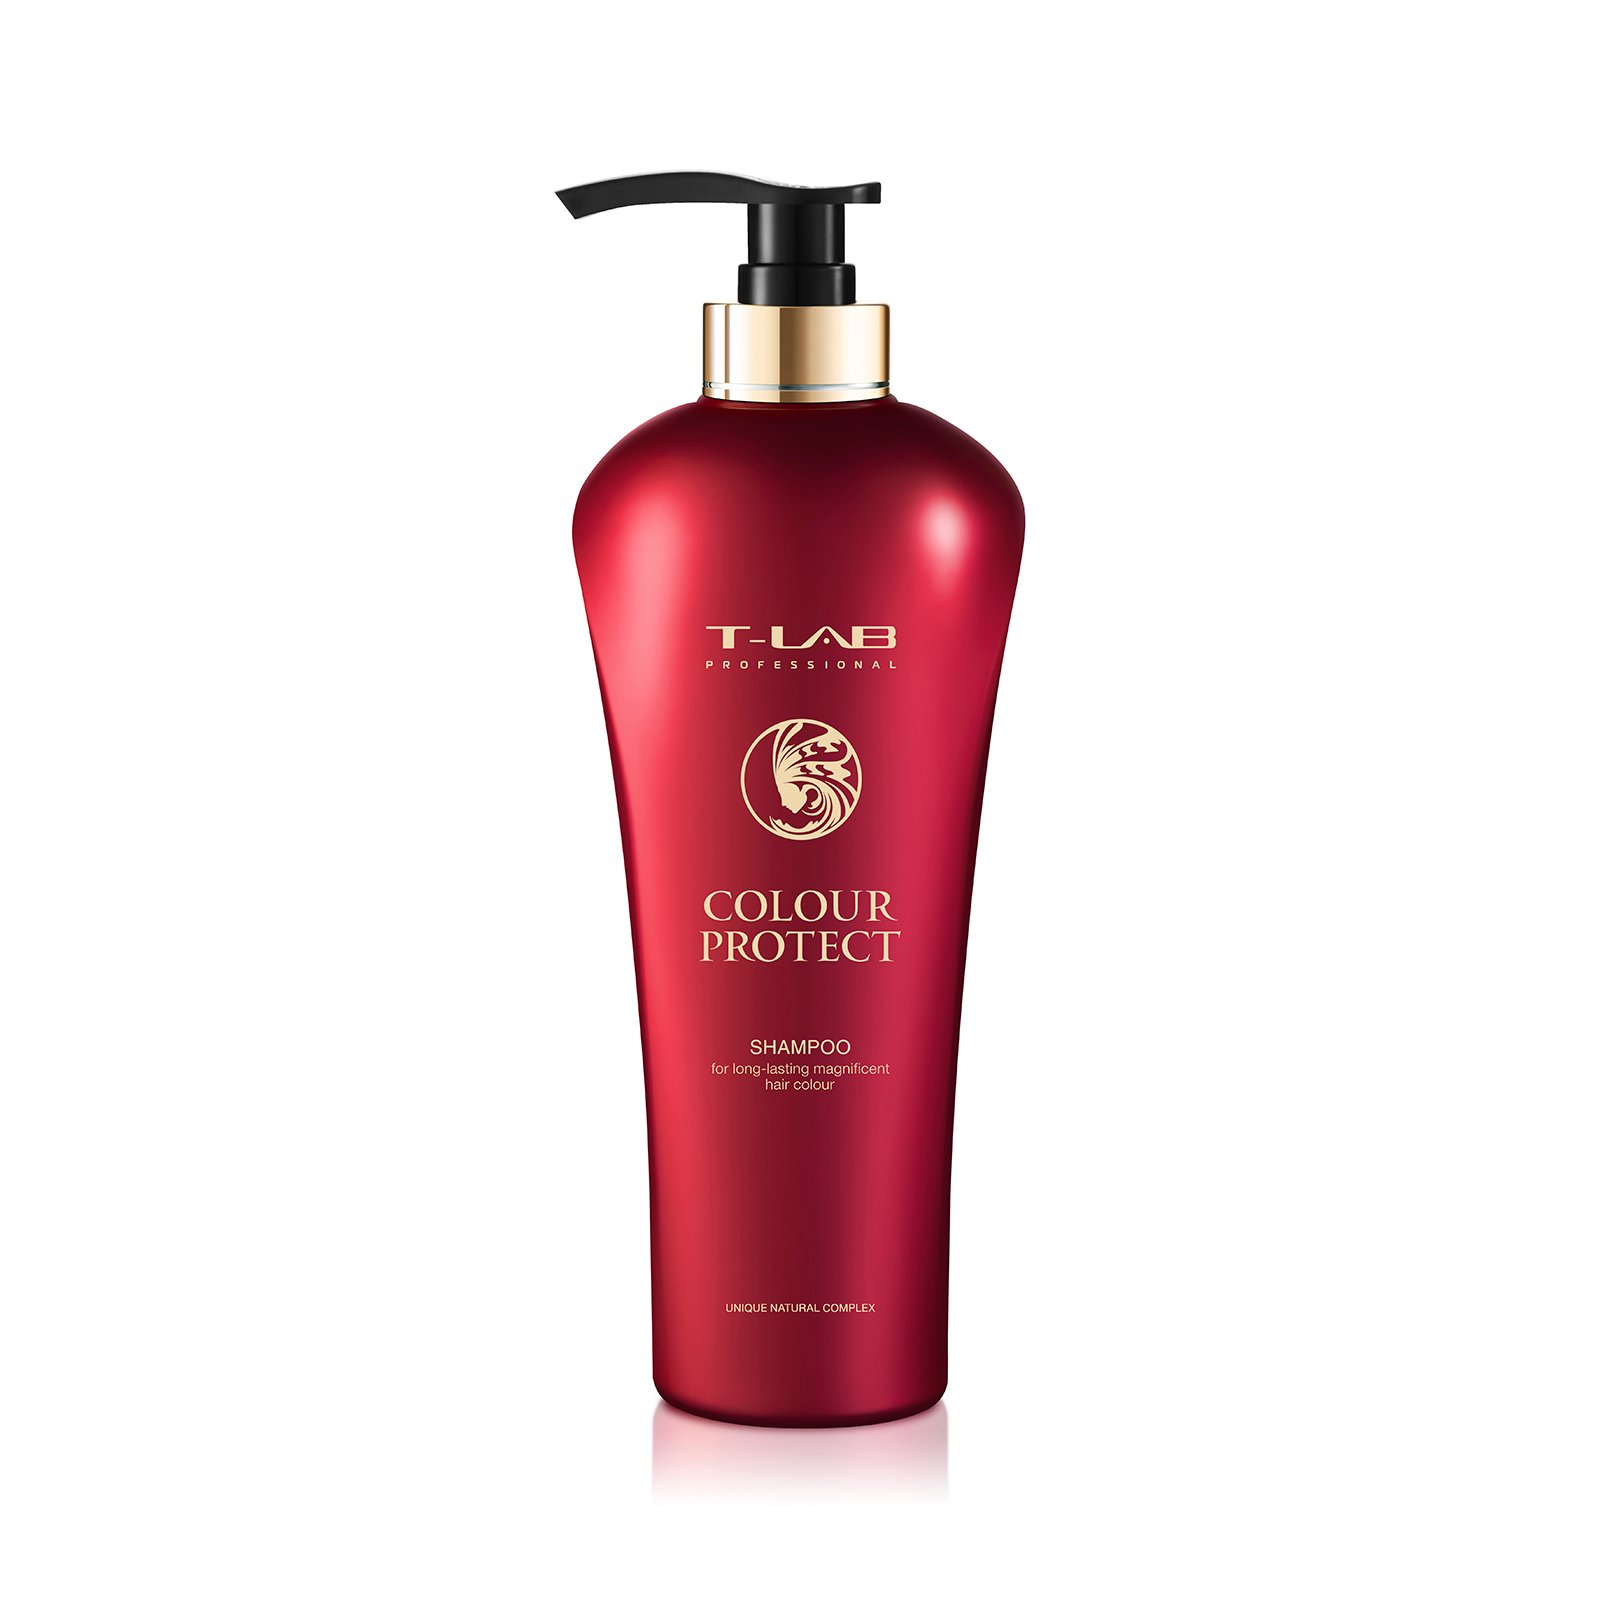 T-Lab Professional - Colour Protect Shampoo 750 ml